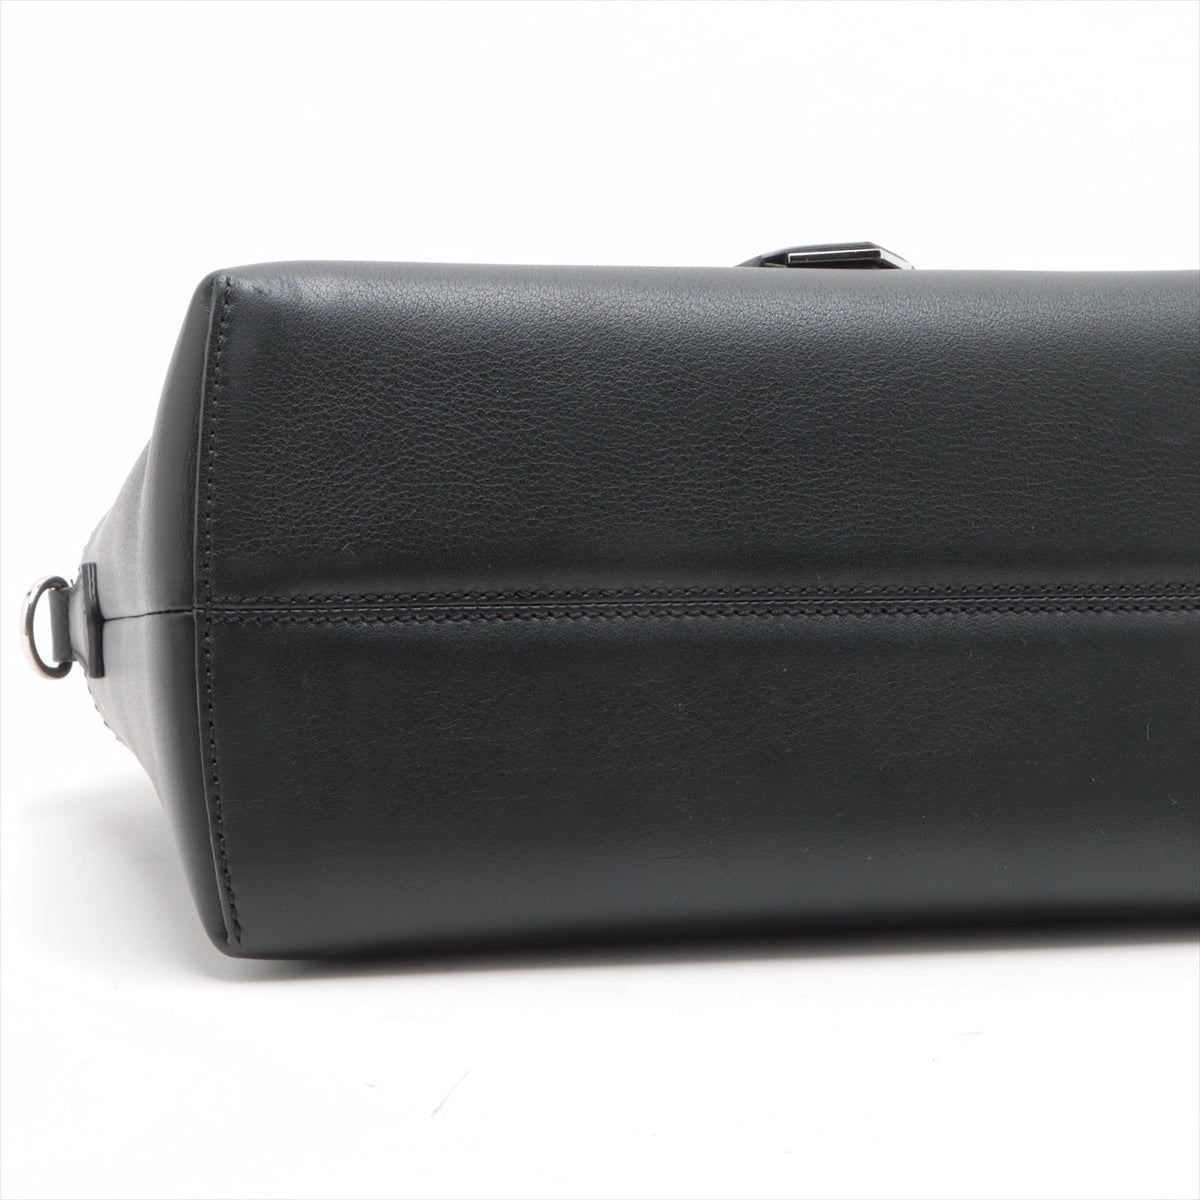 Fendi By the Way Medium Leather 2way handbag Black 8BL146